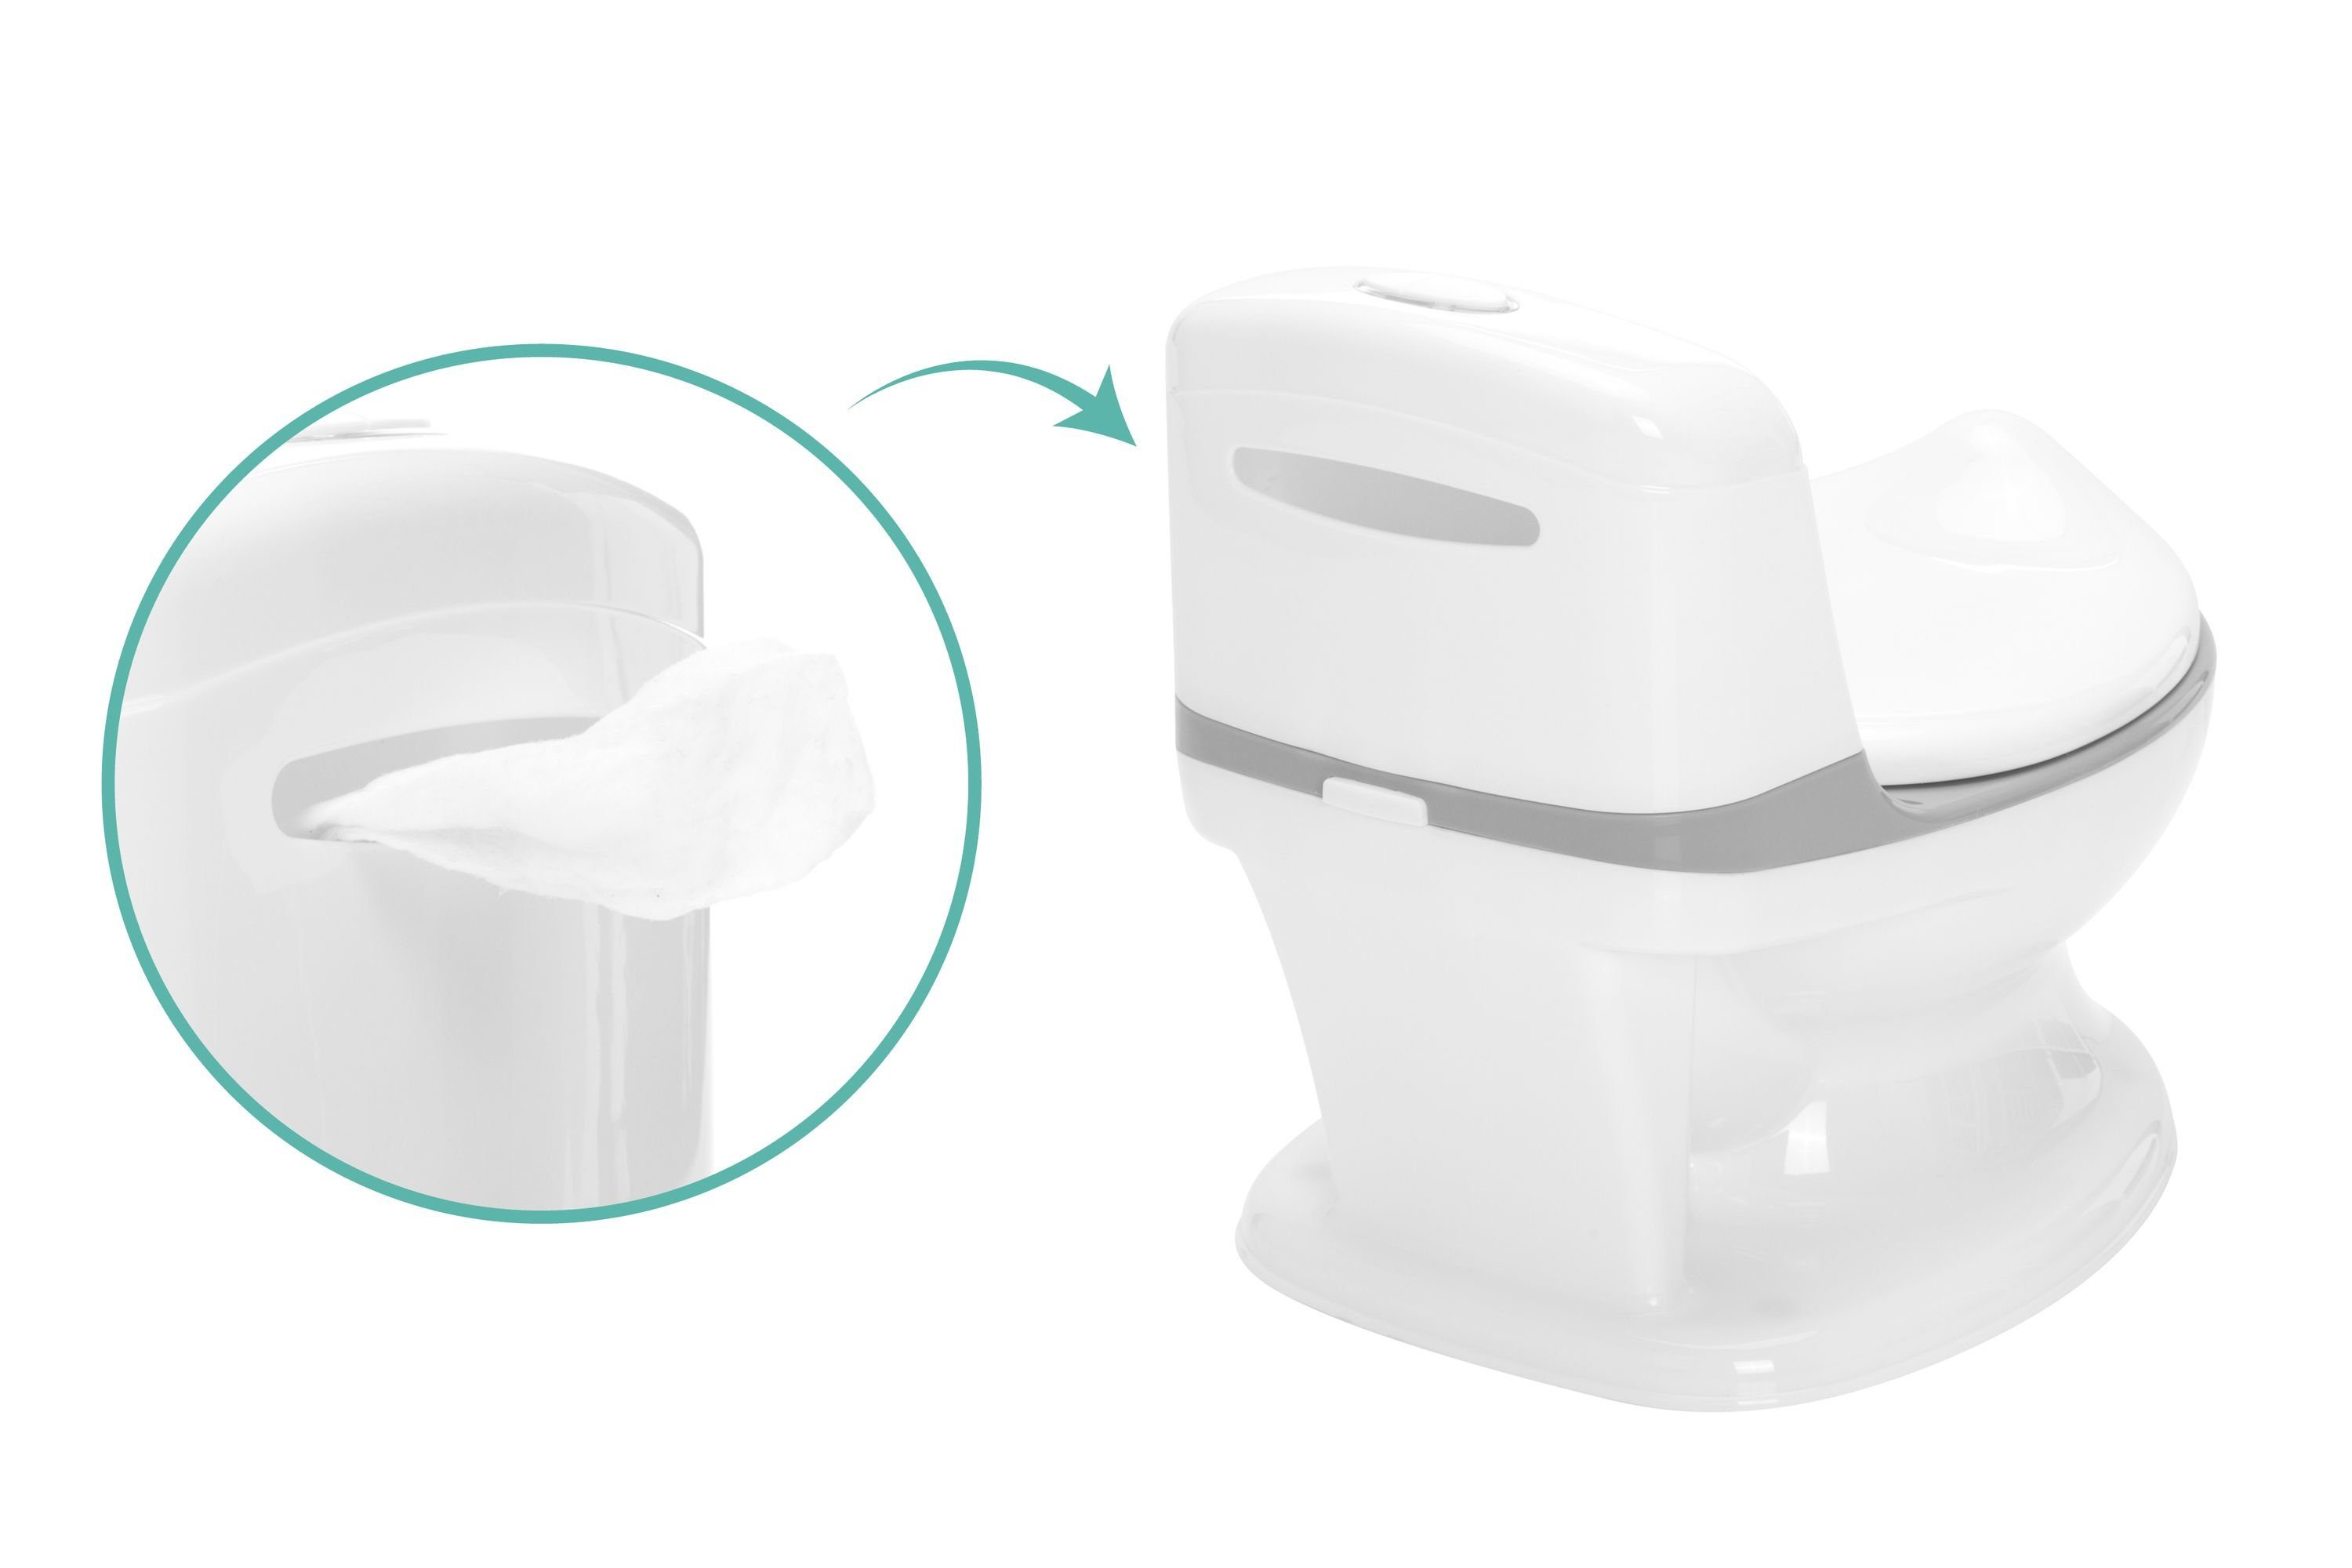 Mini Toilette Exklusiv Fillikid Fillikid Toilettentrainer